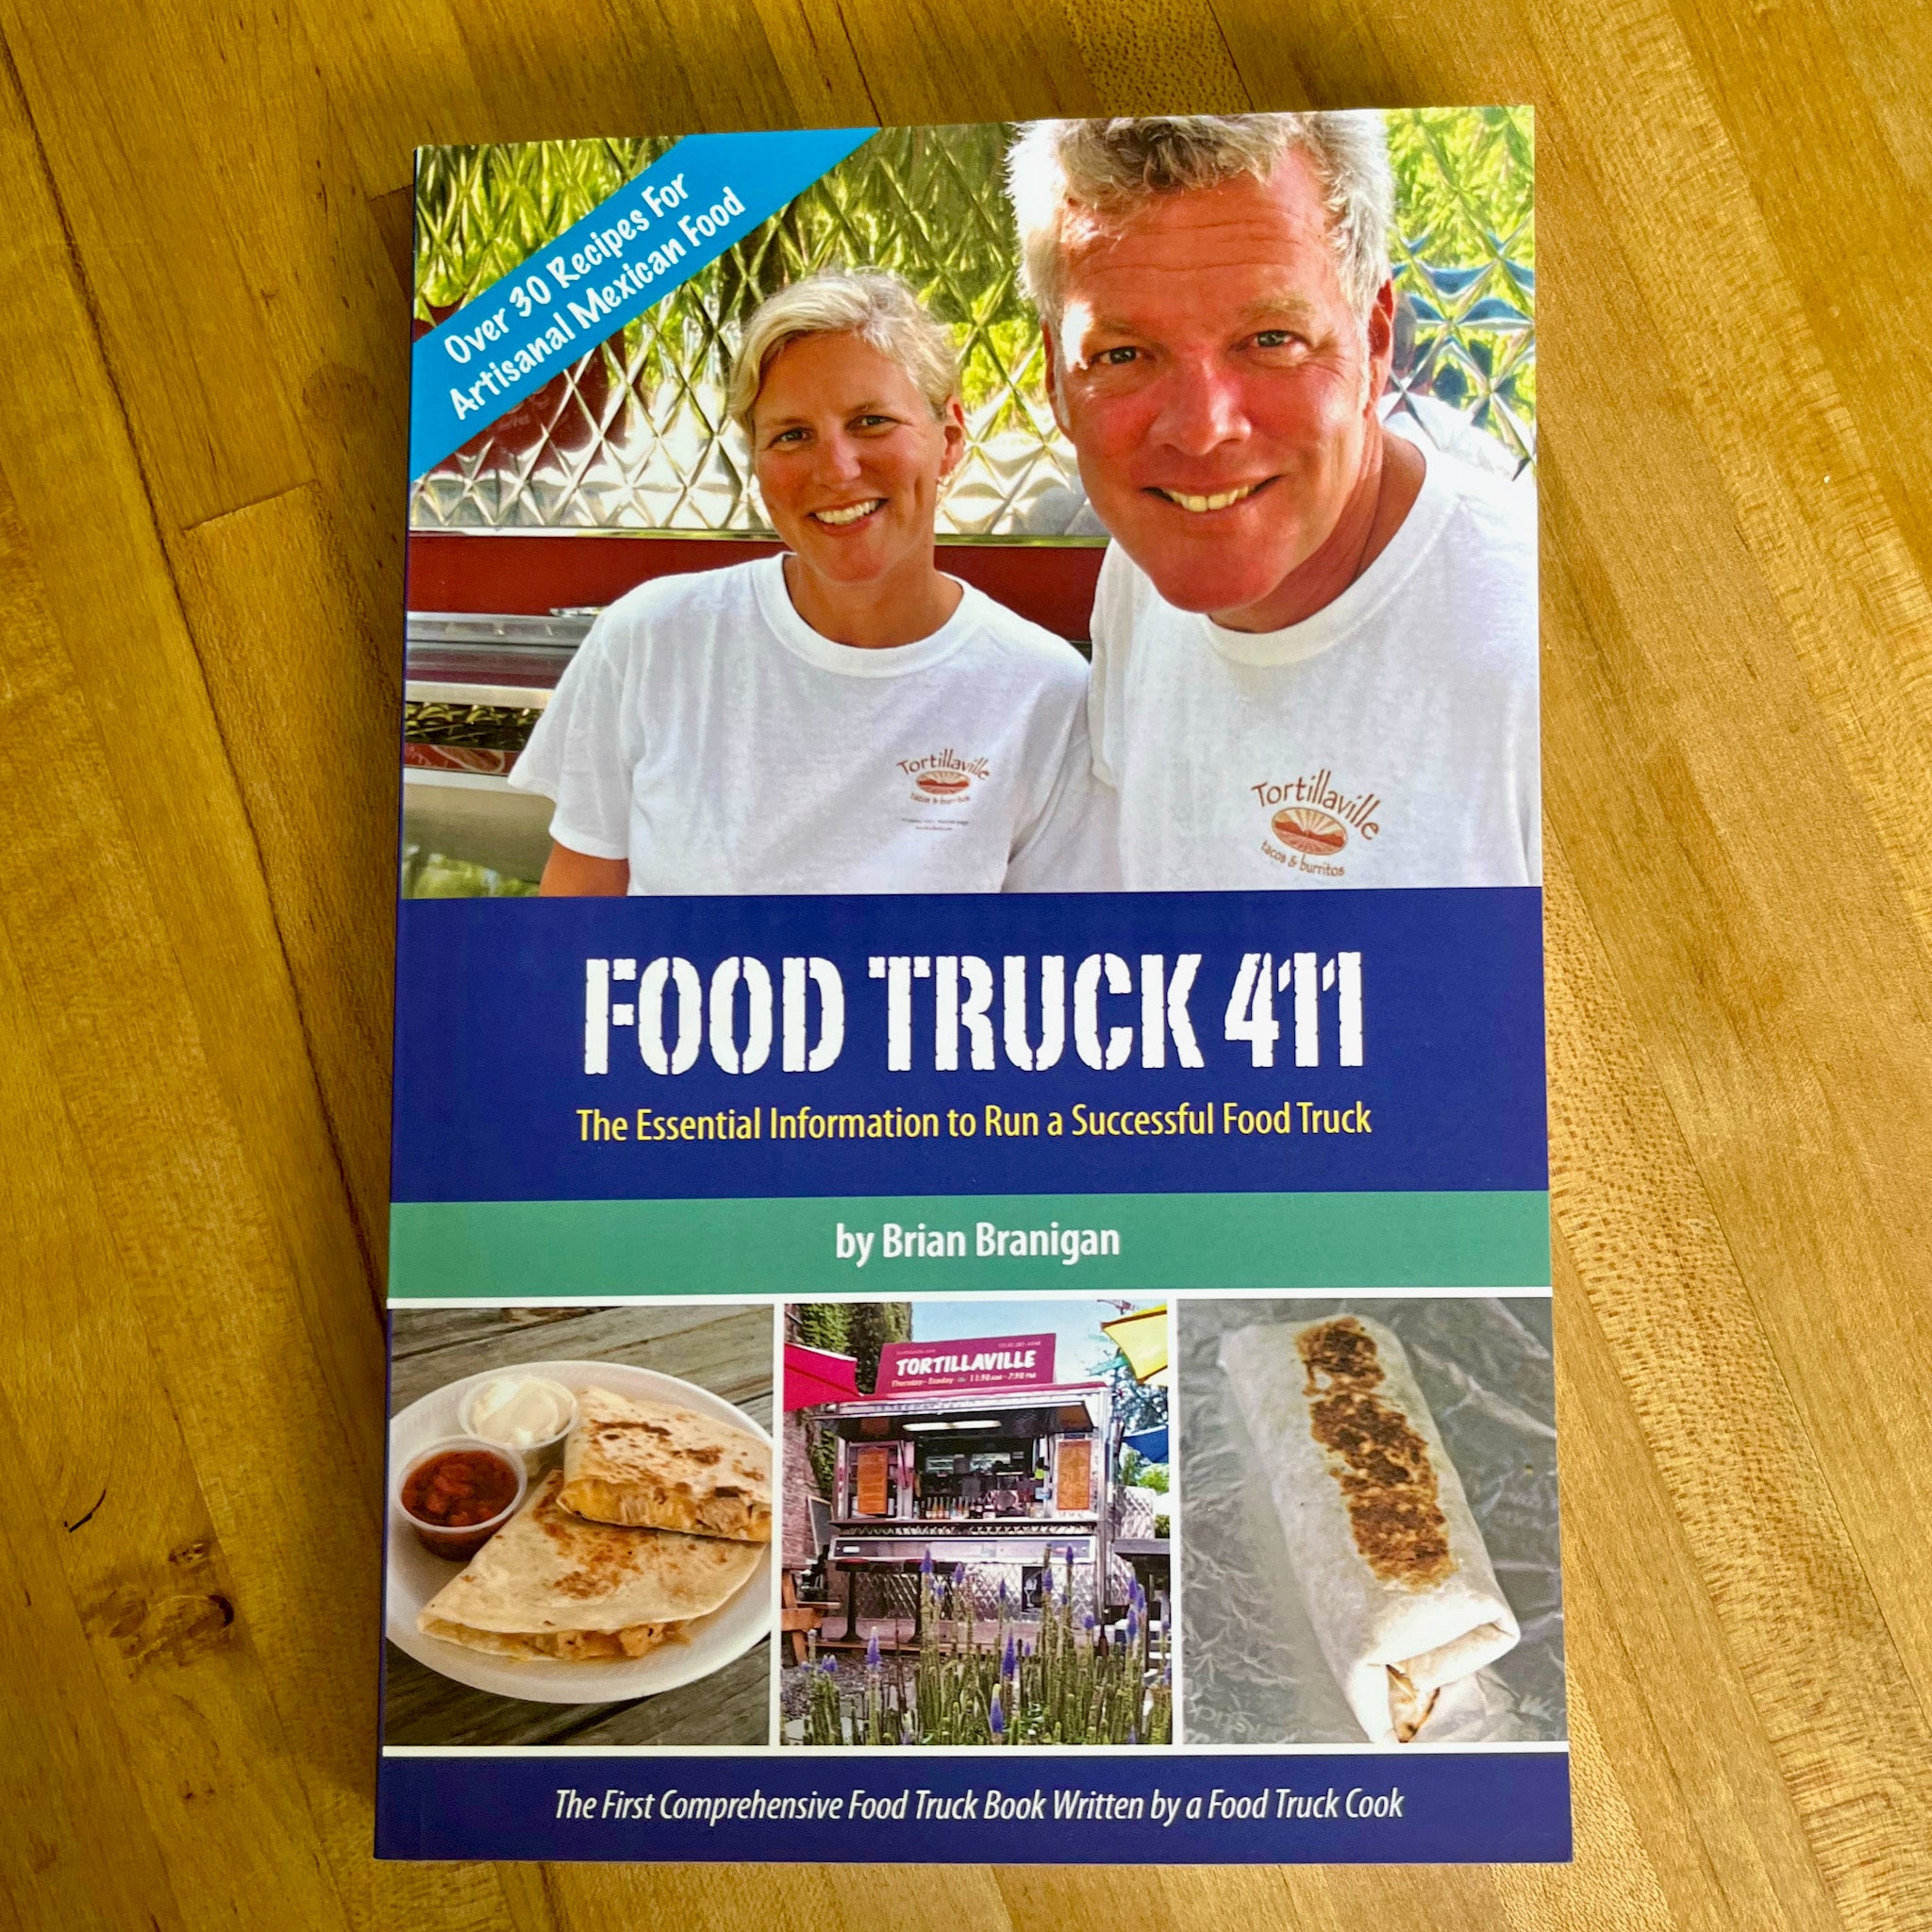 Food Truck 411